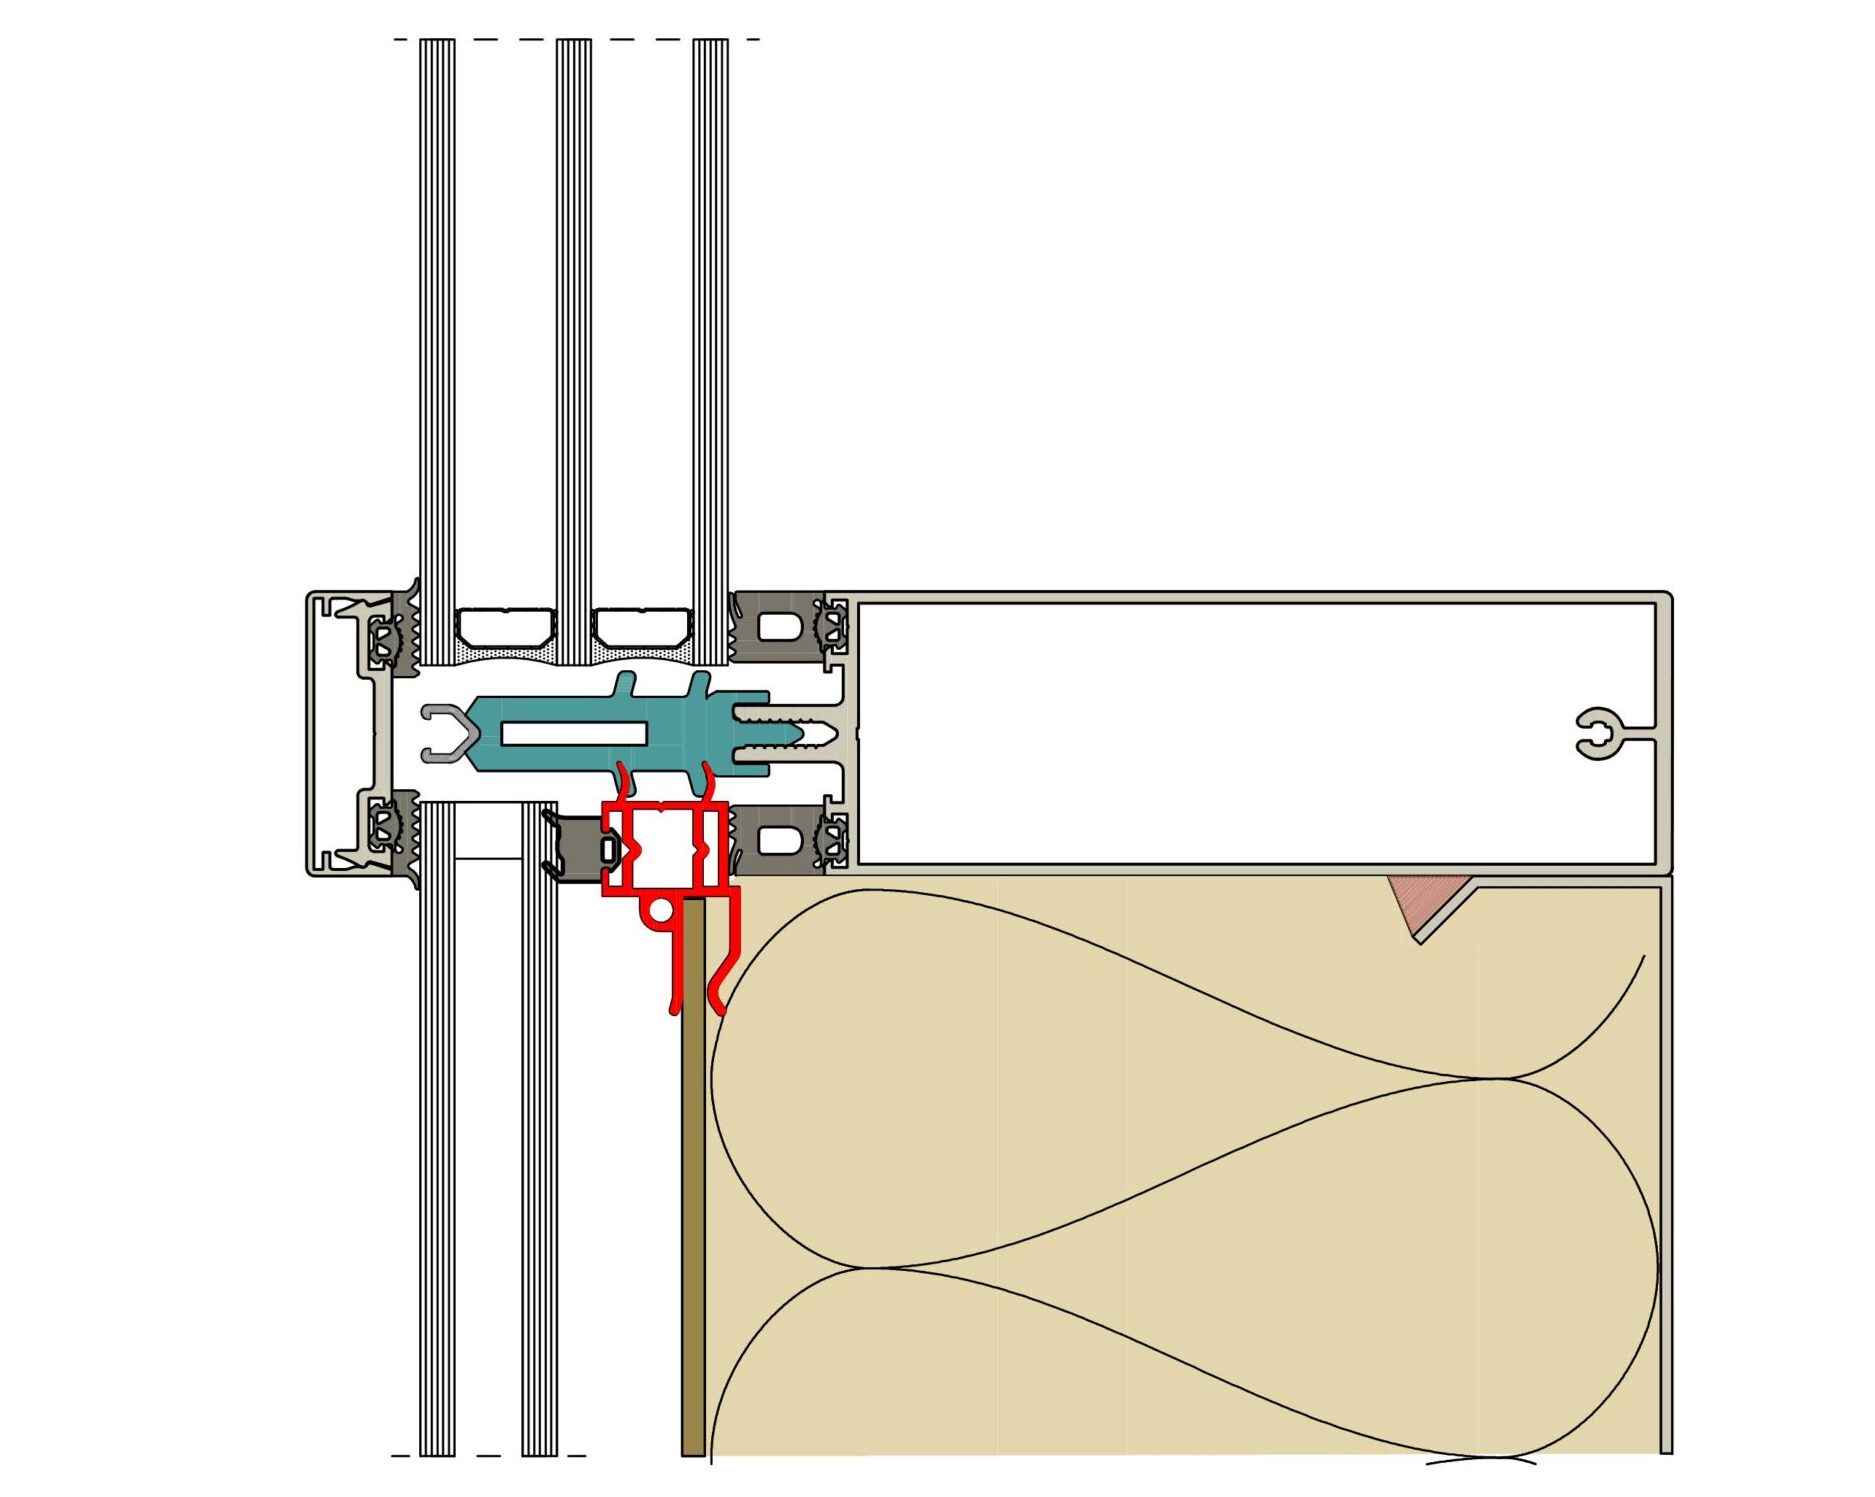 Parapet frame profile, parapet area, parapet, spandrel glazing, parapet infill